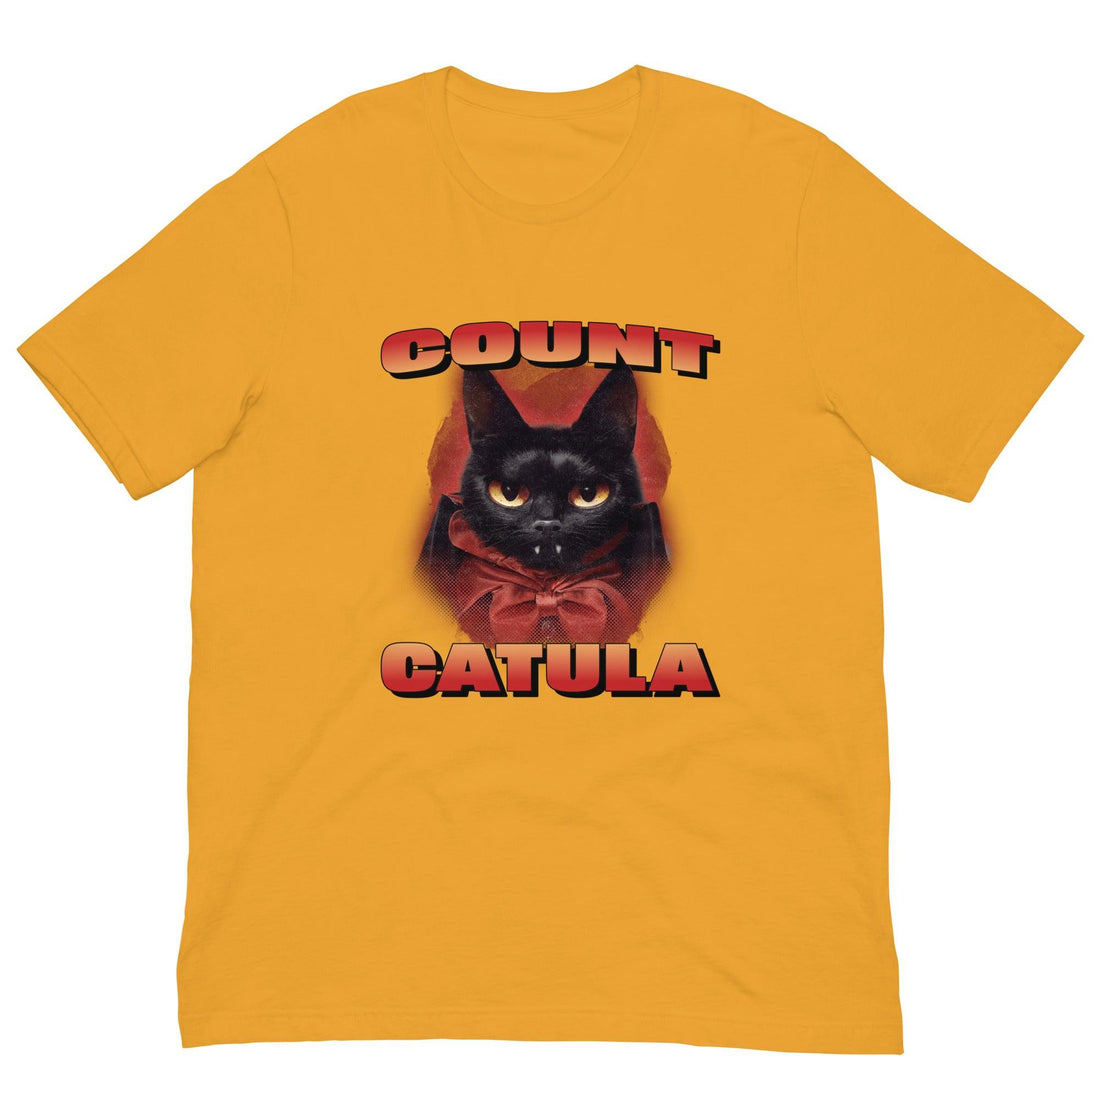 Count Catula Cat Shirt - Cat Shirts USA